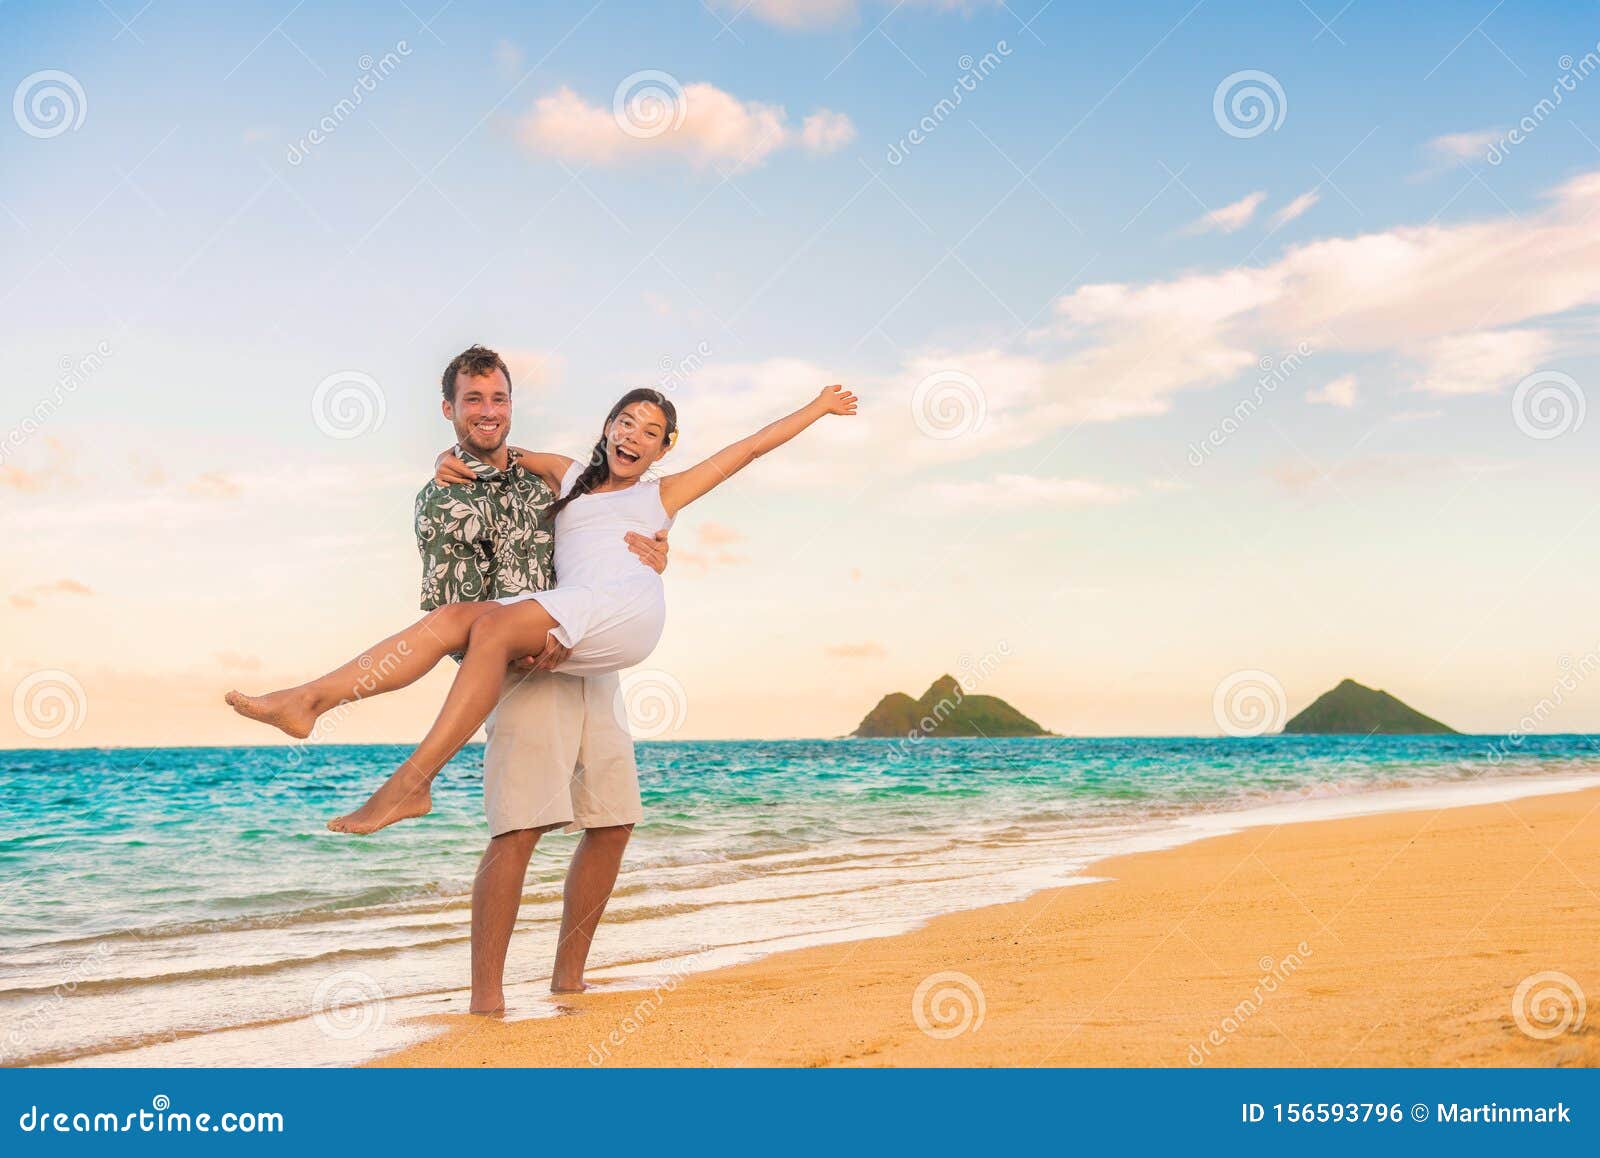 Happy Honeymoon Couple On Beach Wedding Vacation Newlyweds Excited In